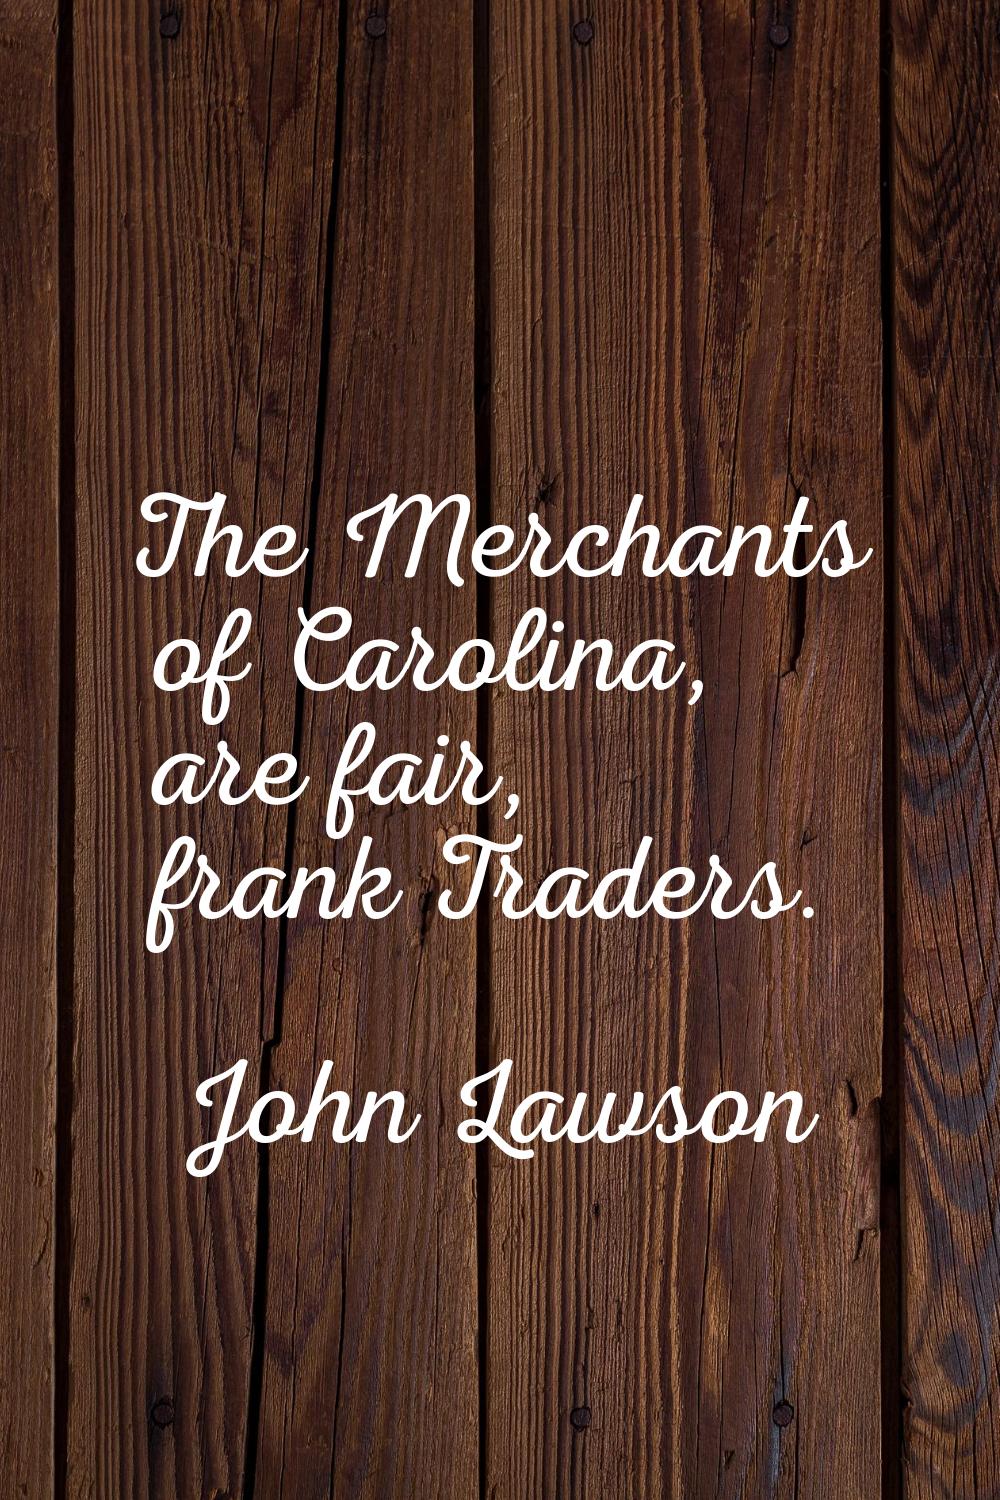 The Merchants of Carolina, are fair, frank Traders.